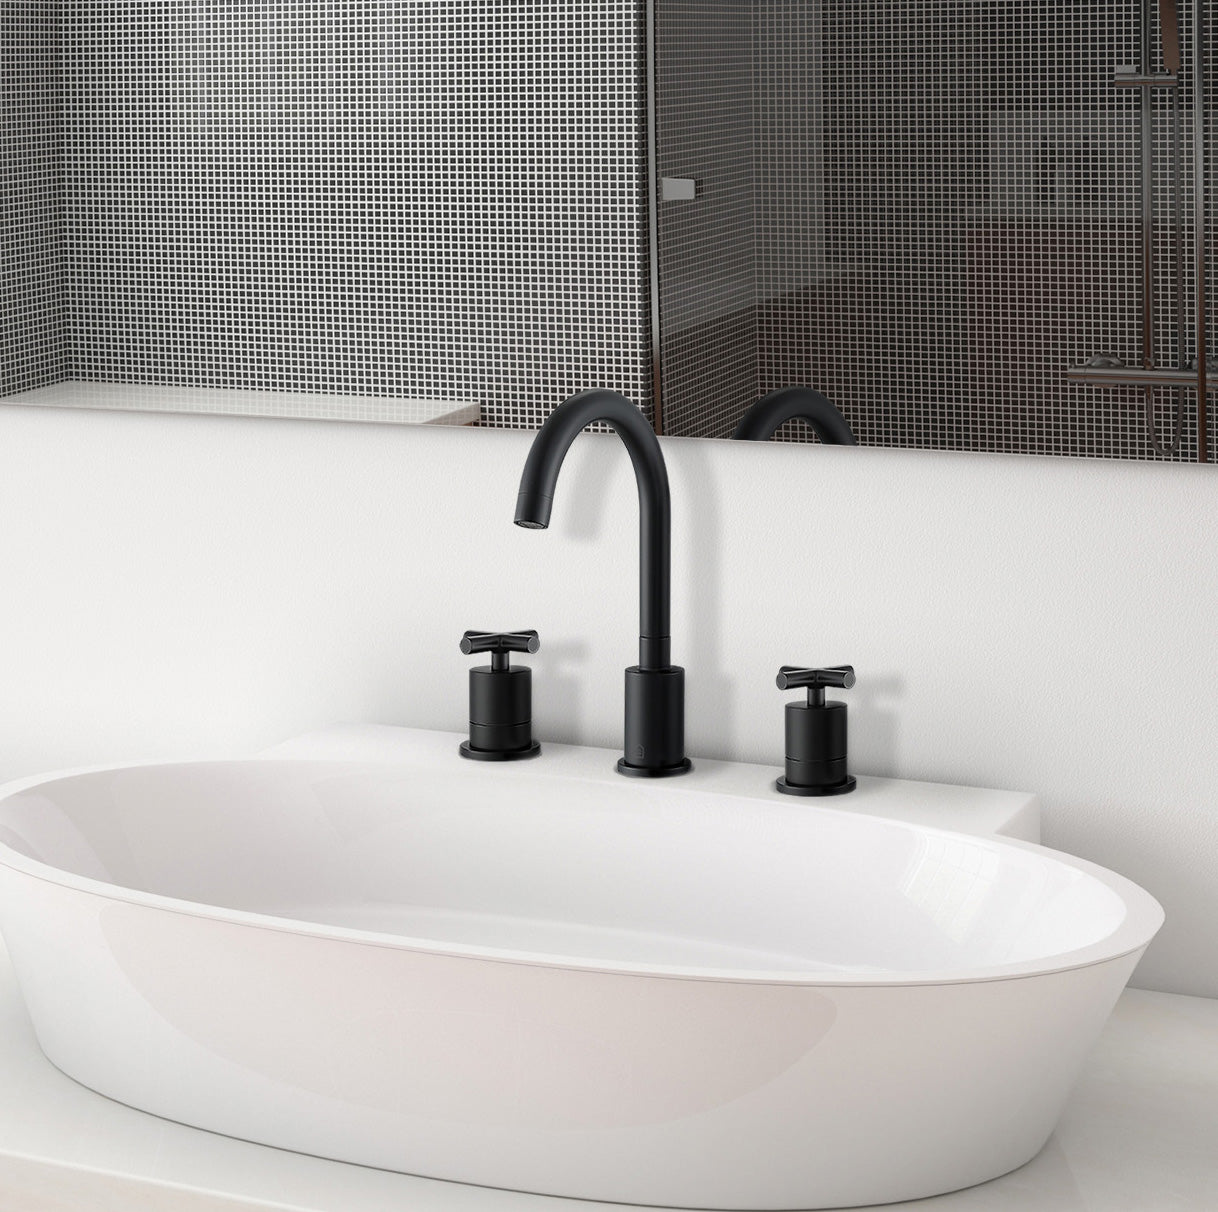 Ancona Ava Series Widespread Cross Handle Bathroom Faucet in Matte Black